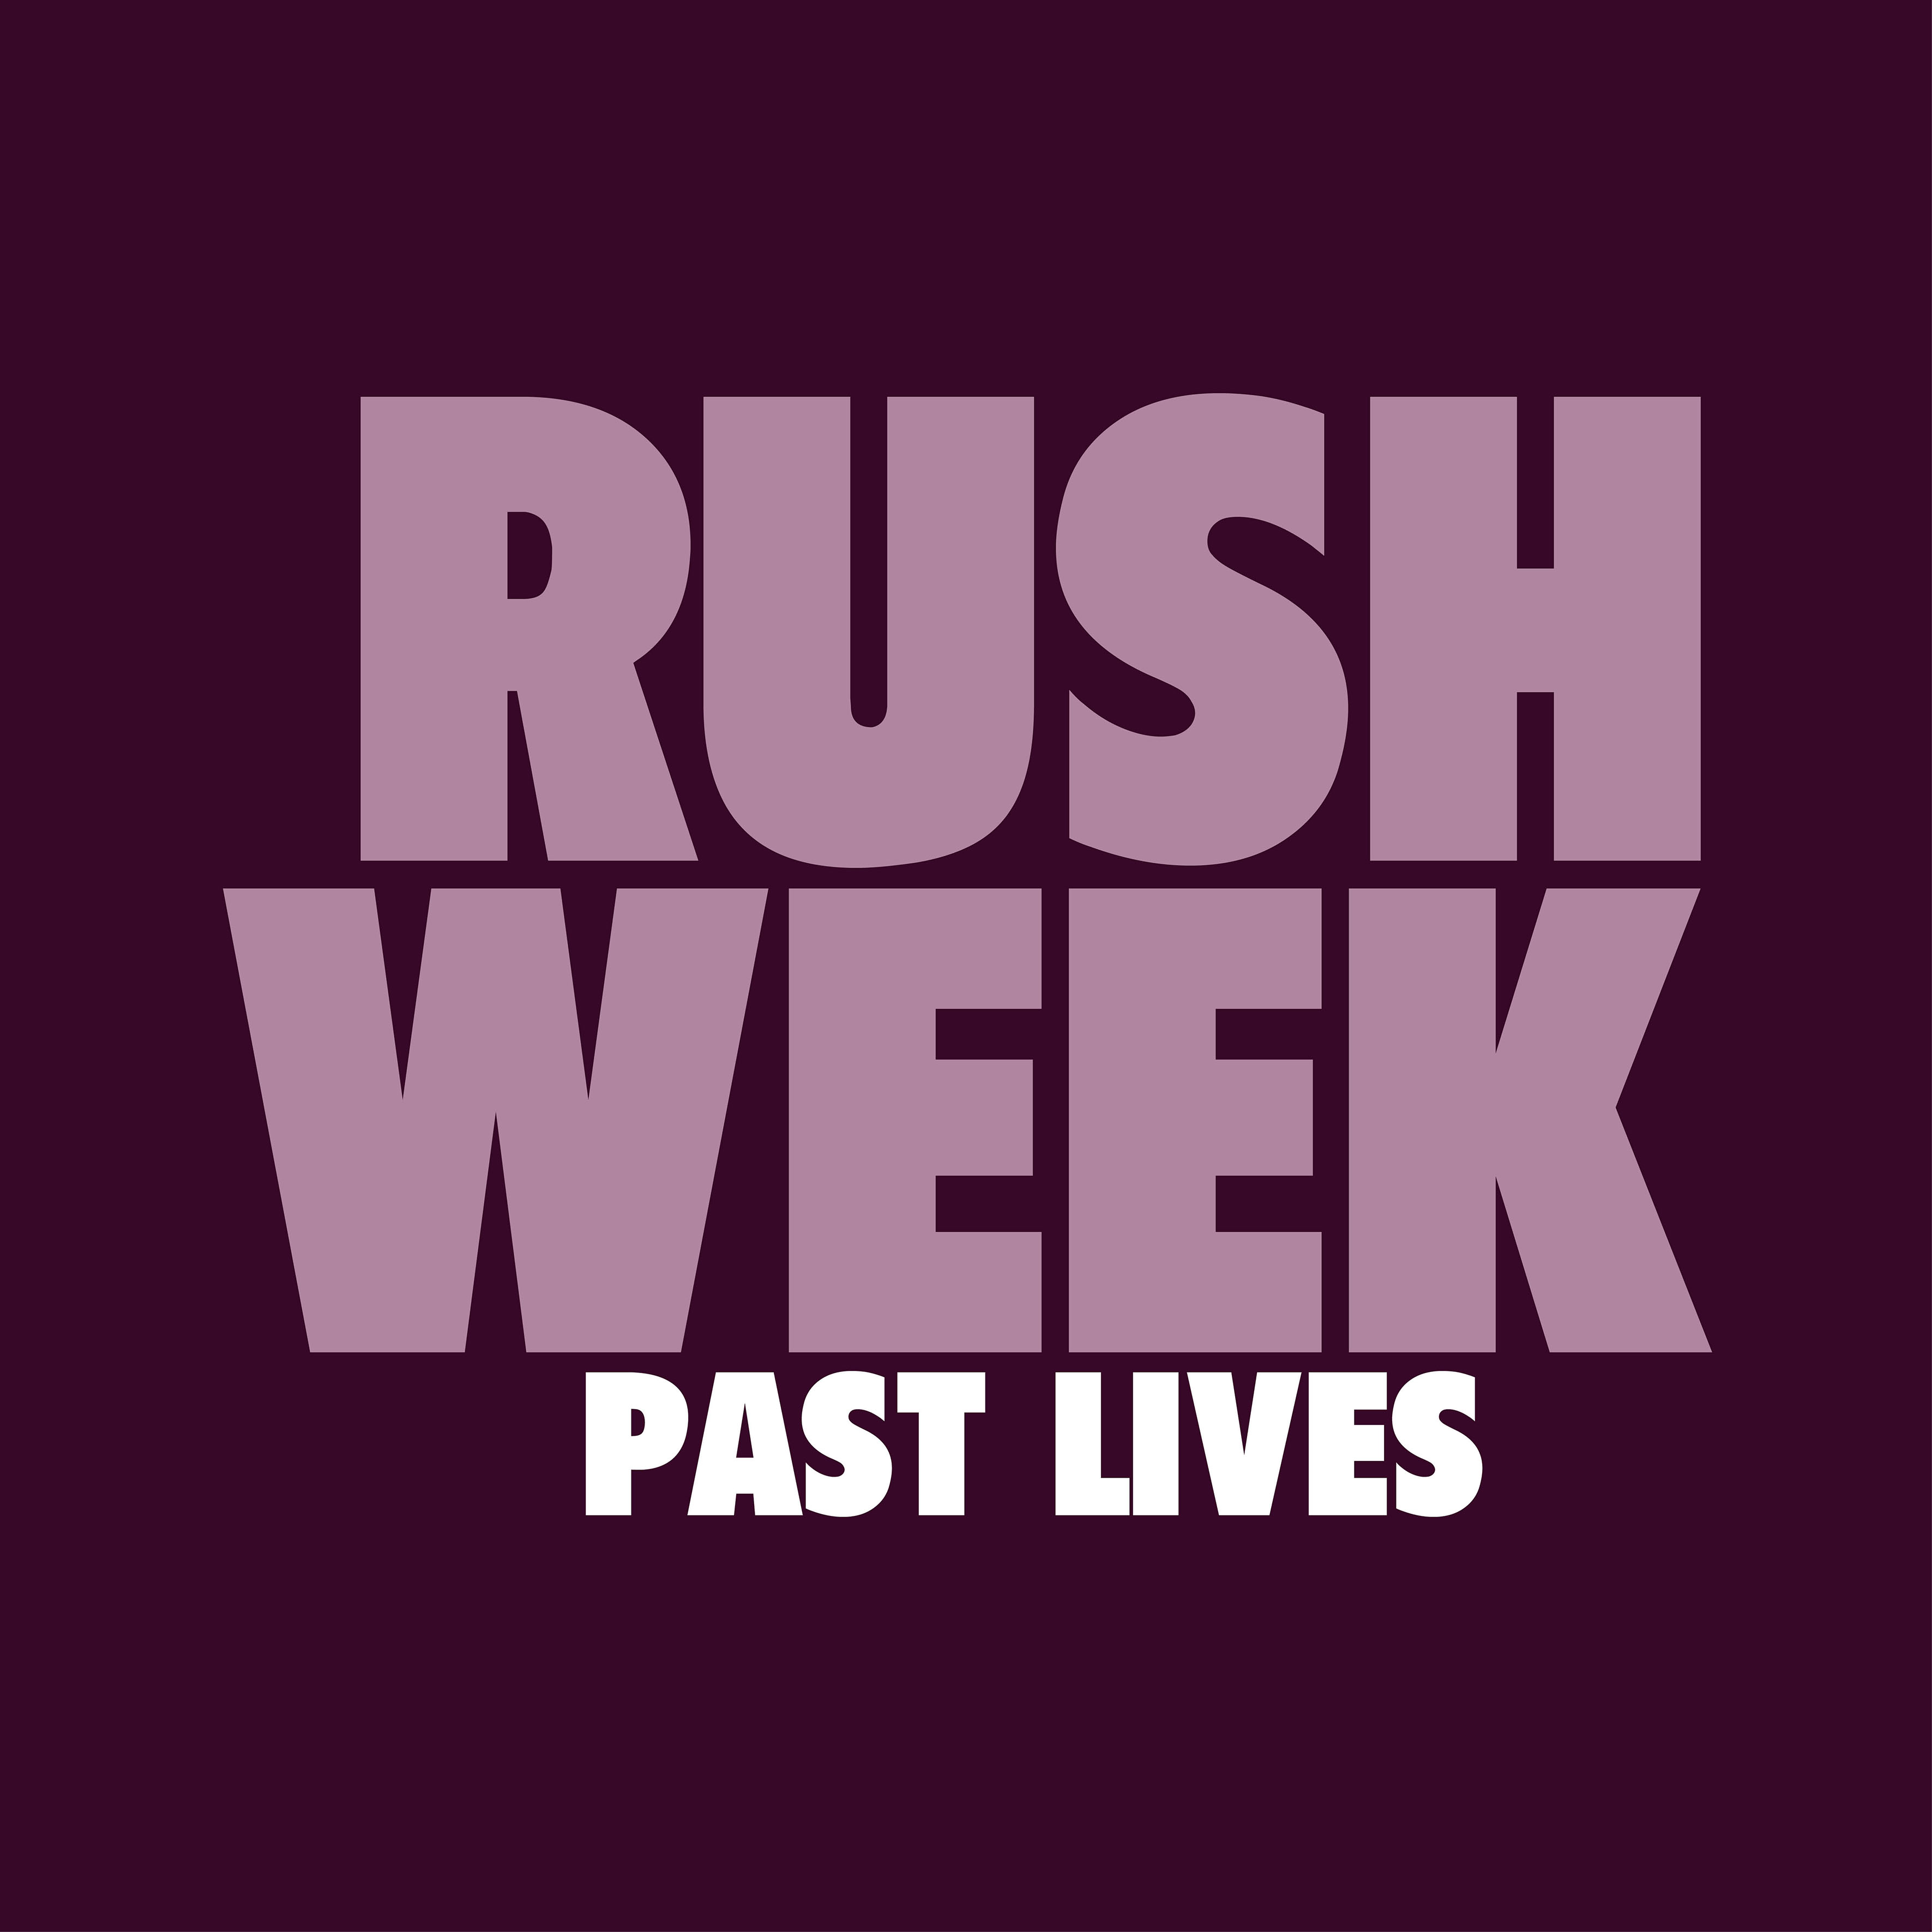 RUSH WEEK "Past Lives" Single Digital 